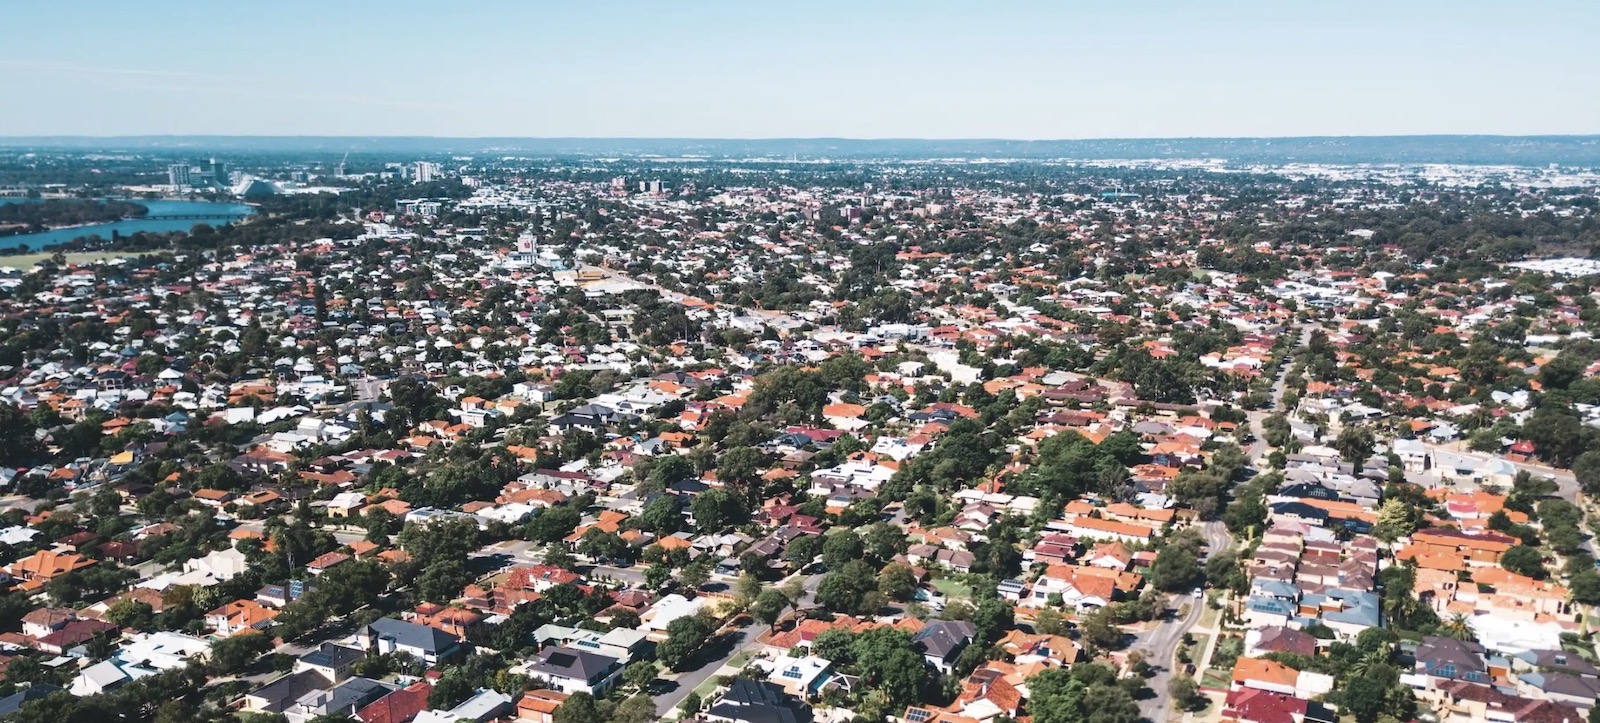 Aerial view of homes in a neighborhood